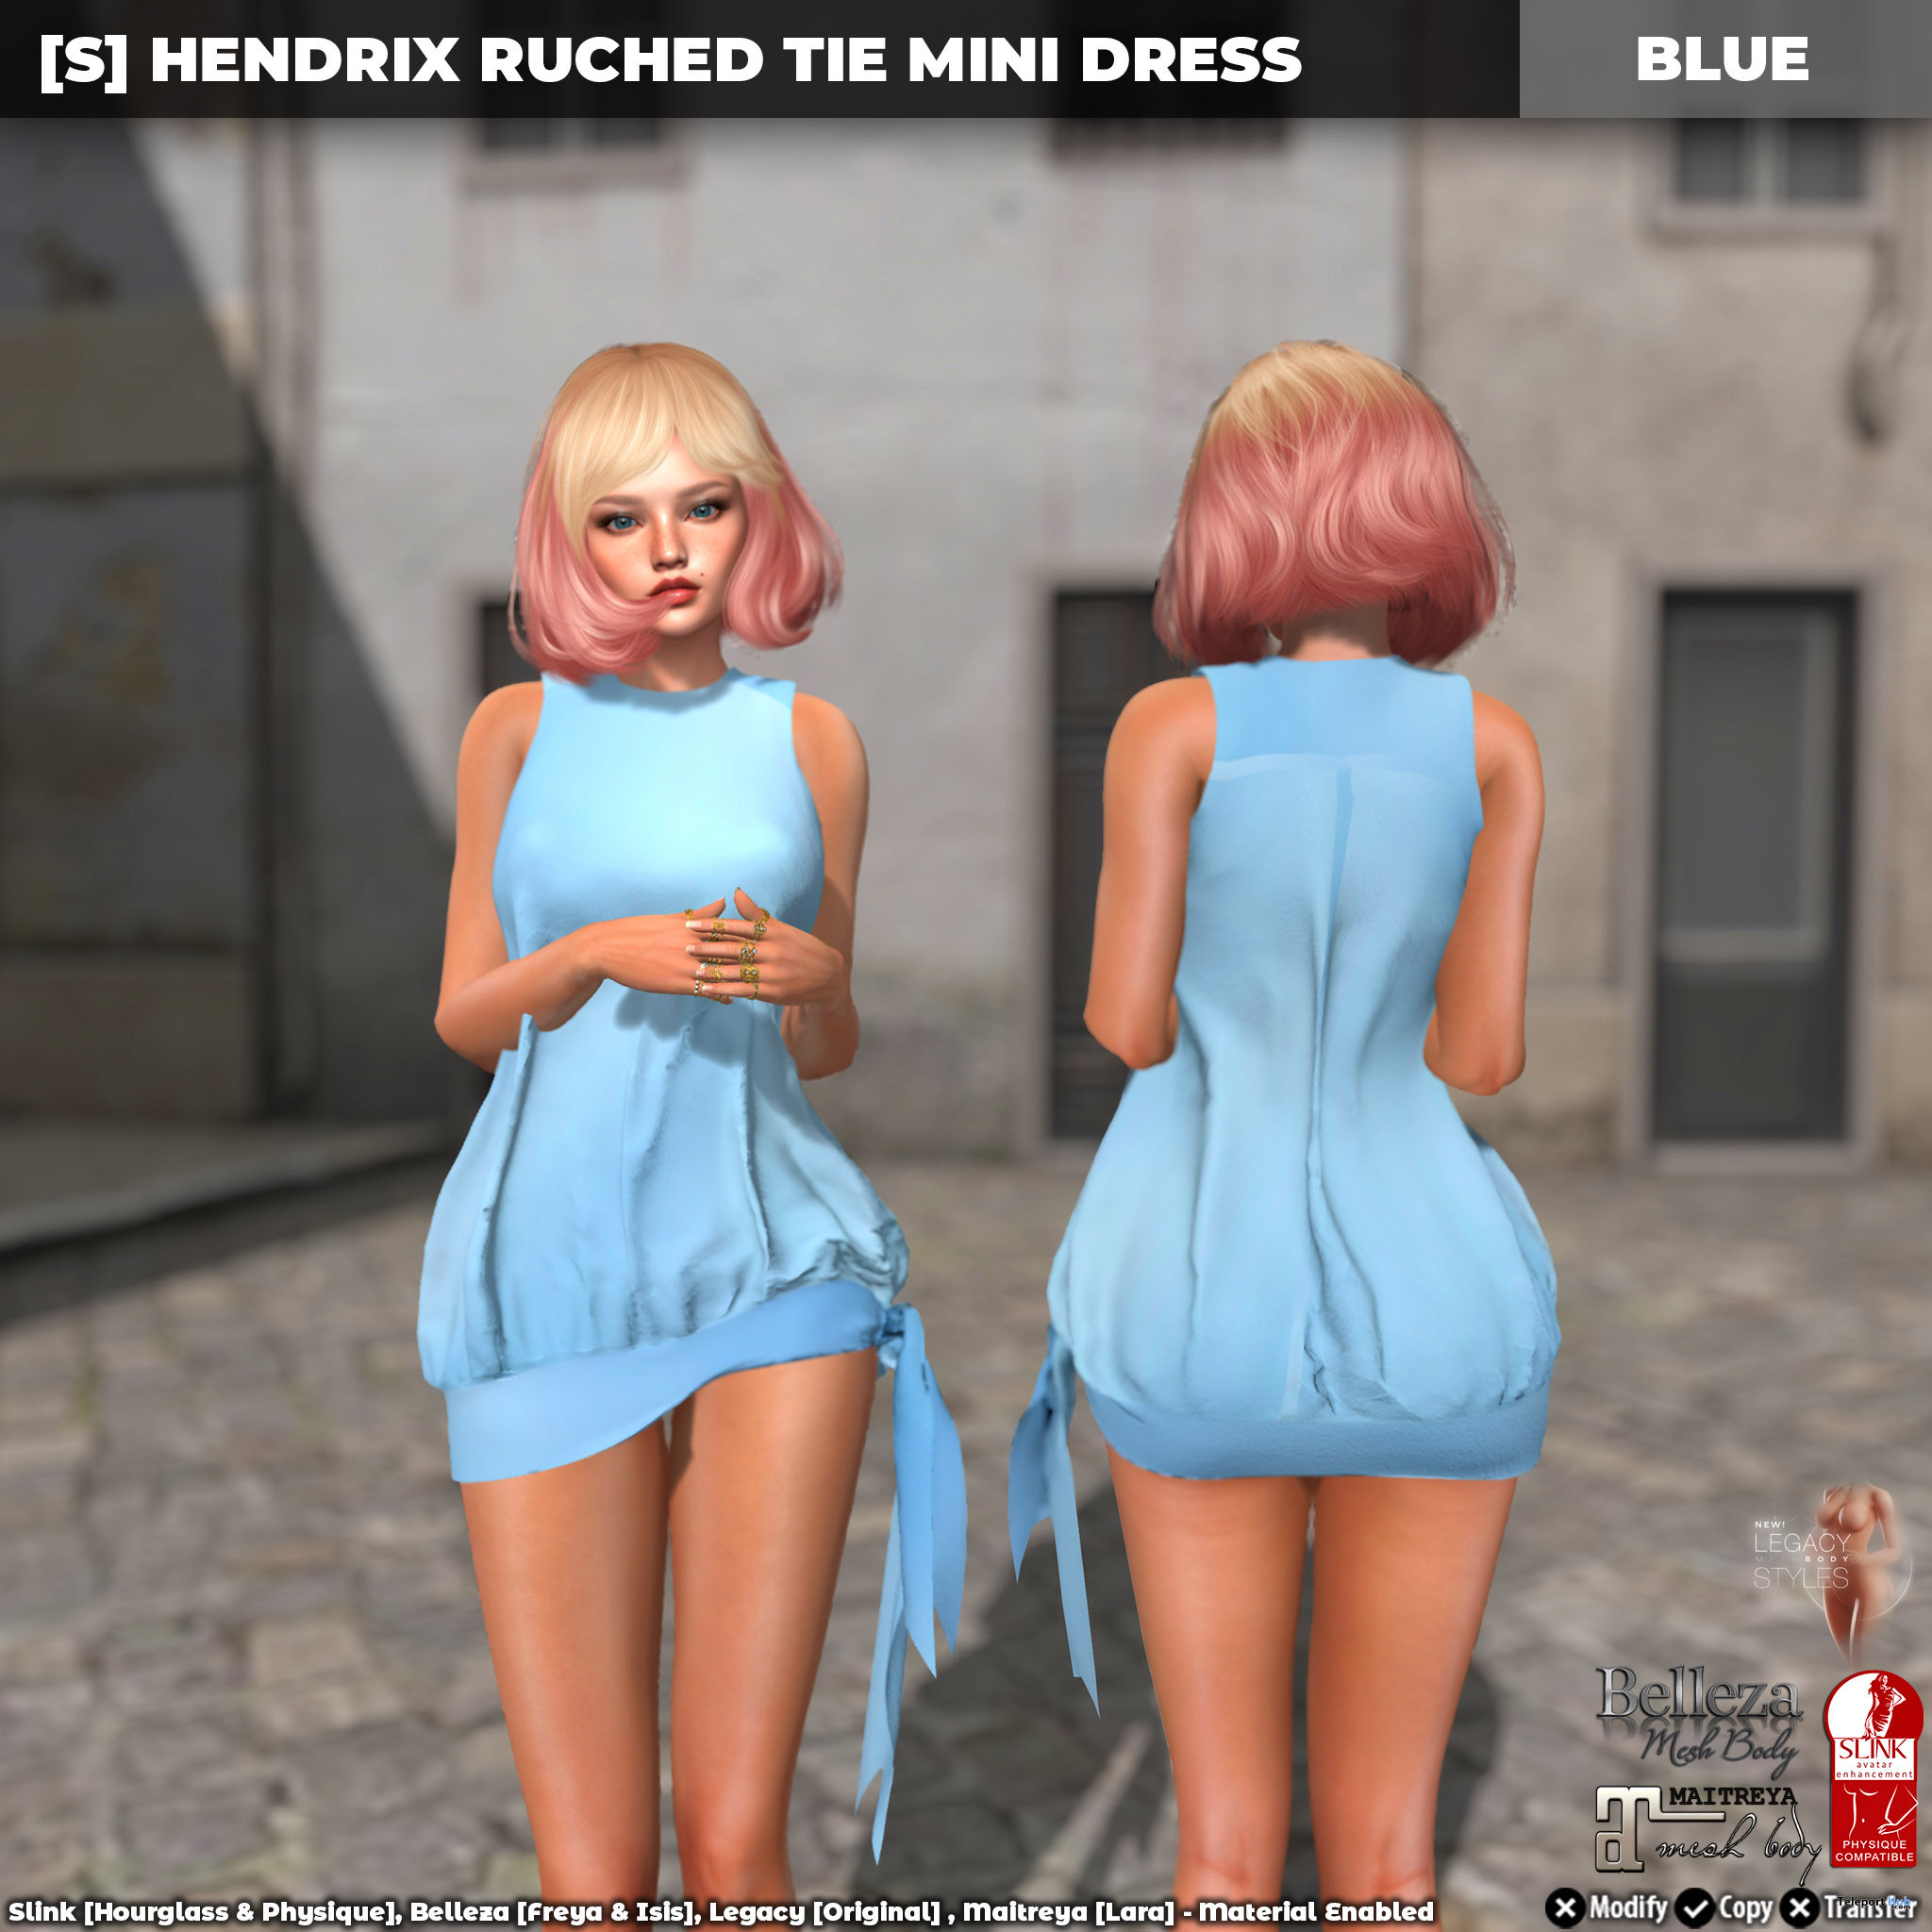 New Release: [S] Hendrix Ruched Tie Mini Dress by [satus Inc] - Teleport Hub - teleporthub.com